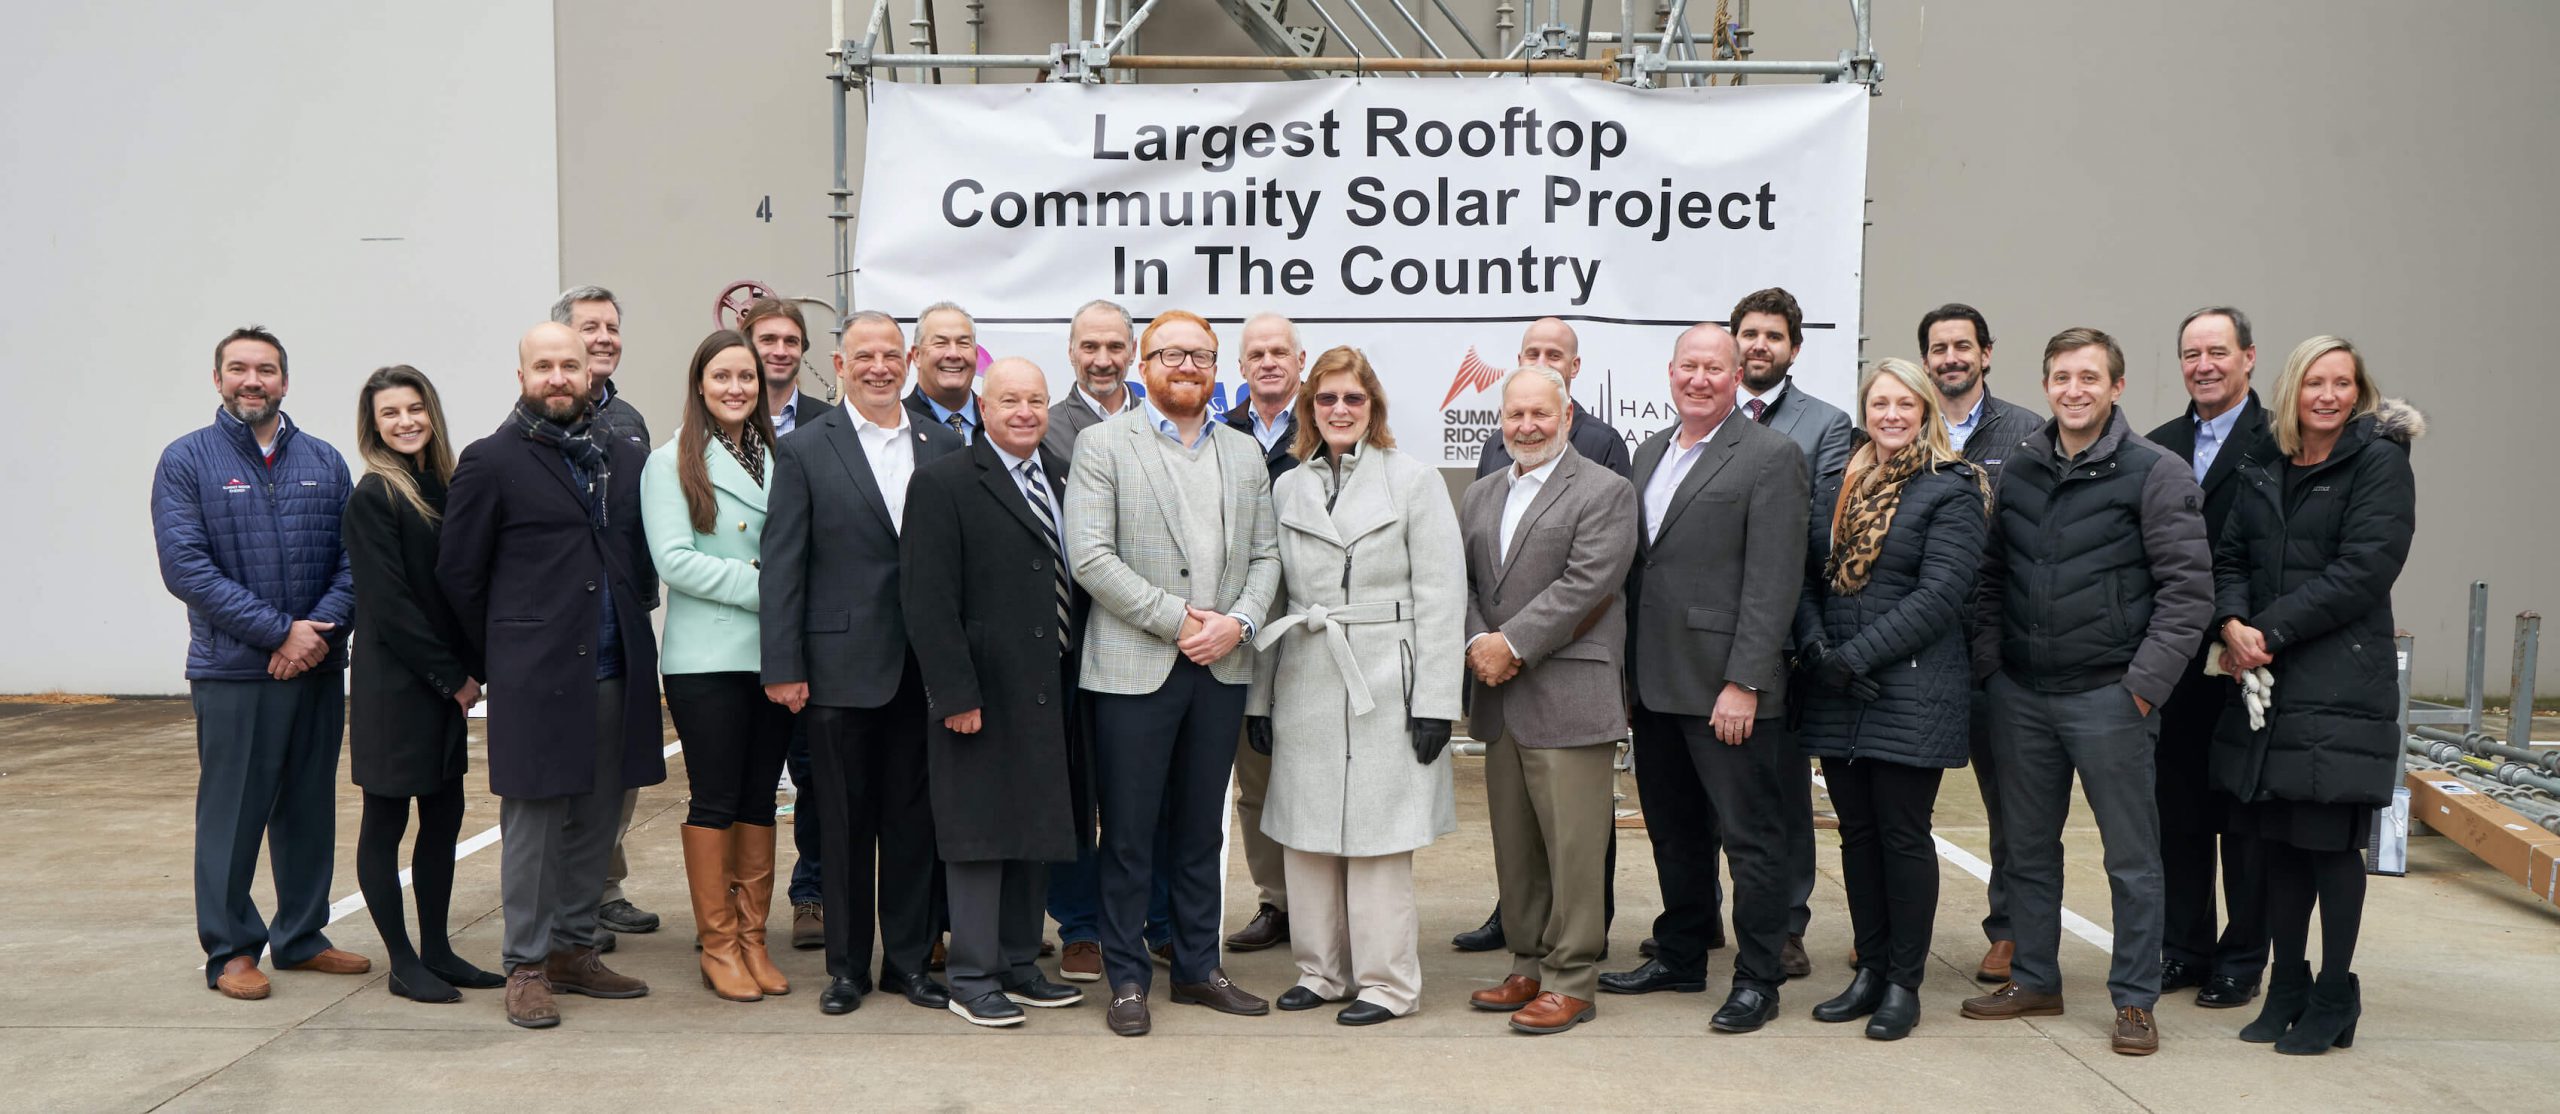 PV Tech: Summit Ridge Energy, Osaka Gas expand solar PV partnership with 100MW pipeline in Virginia